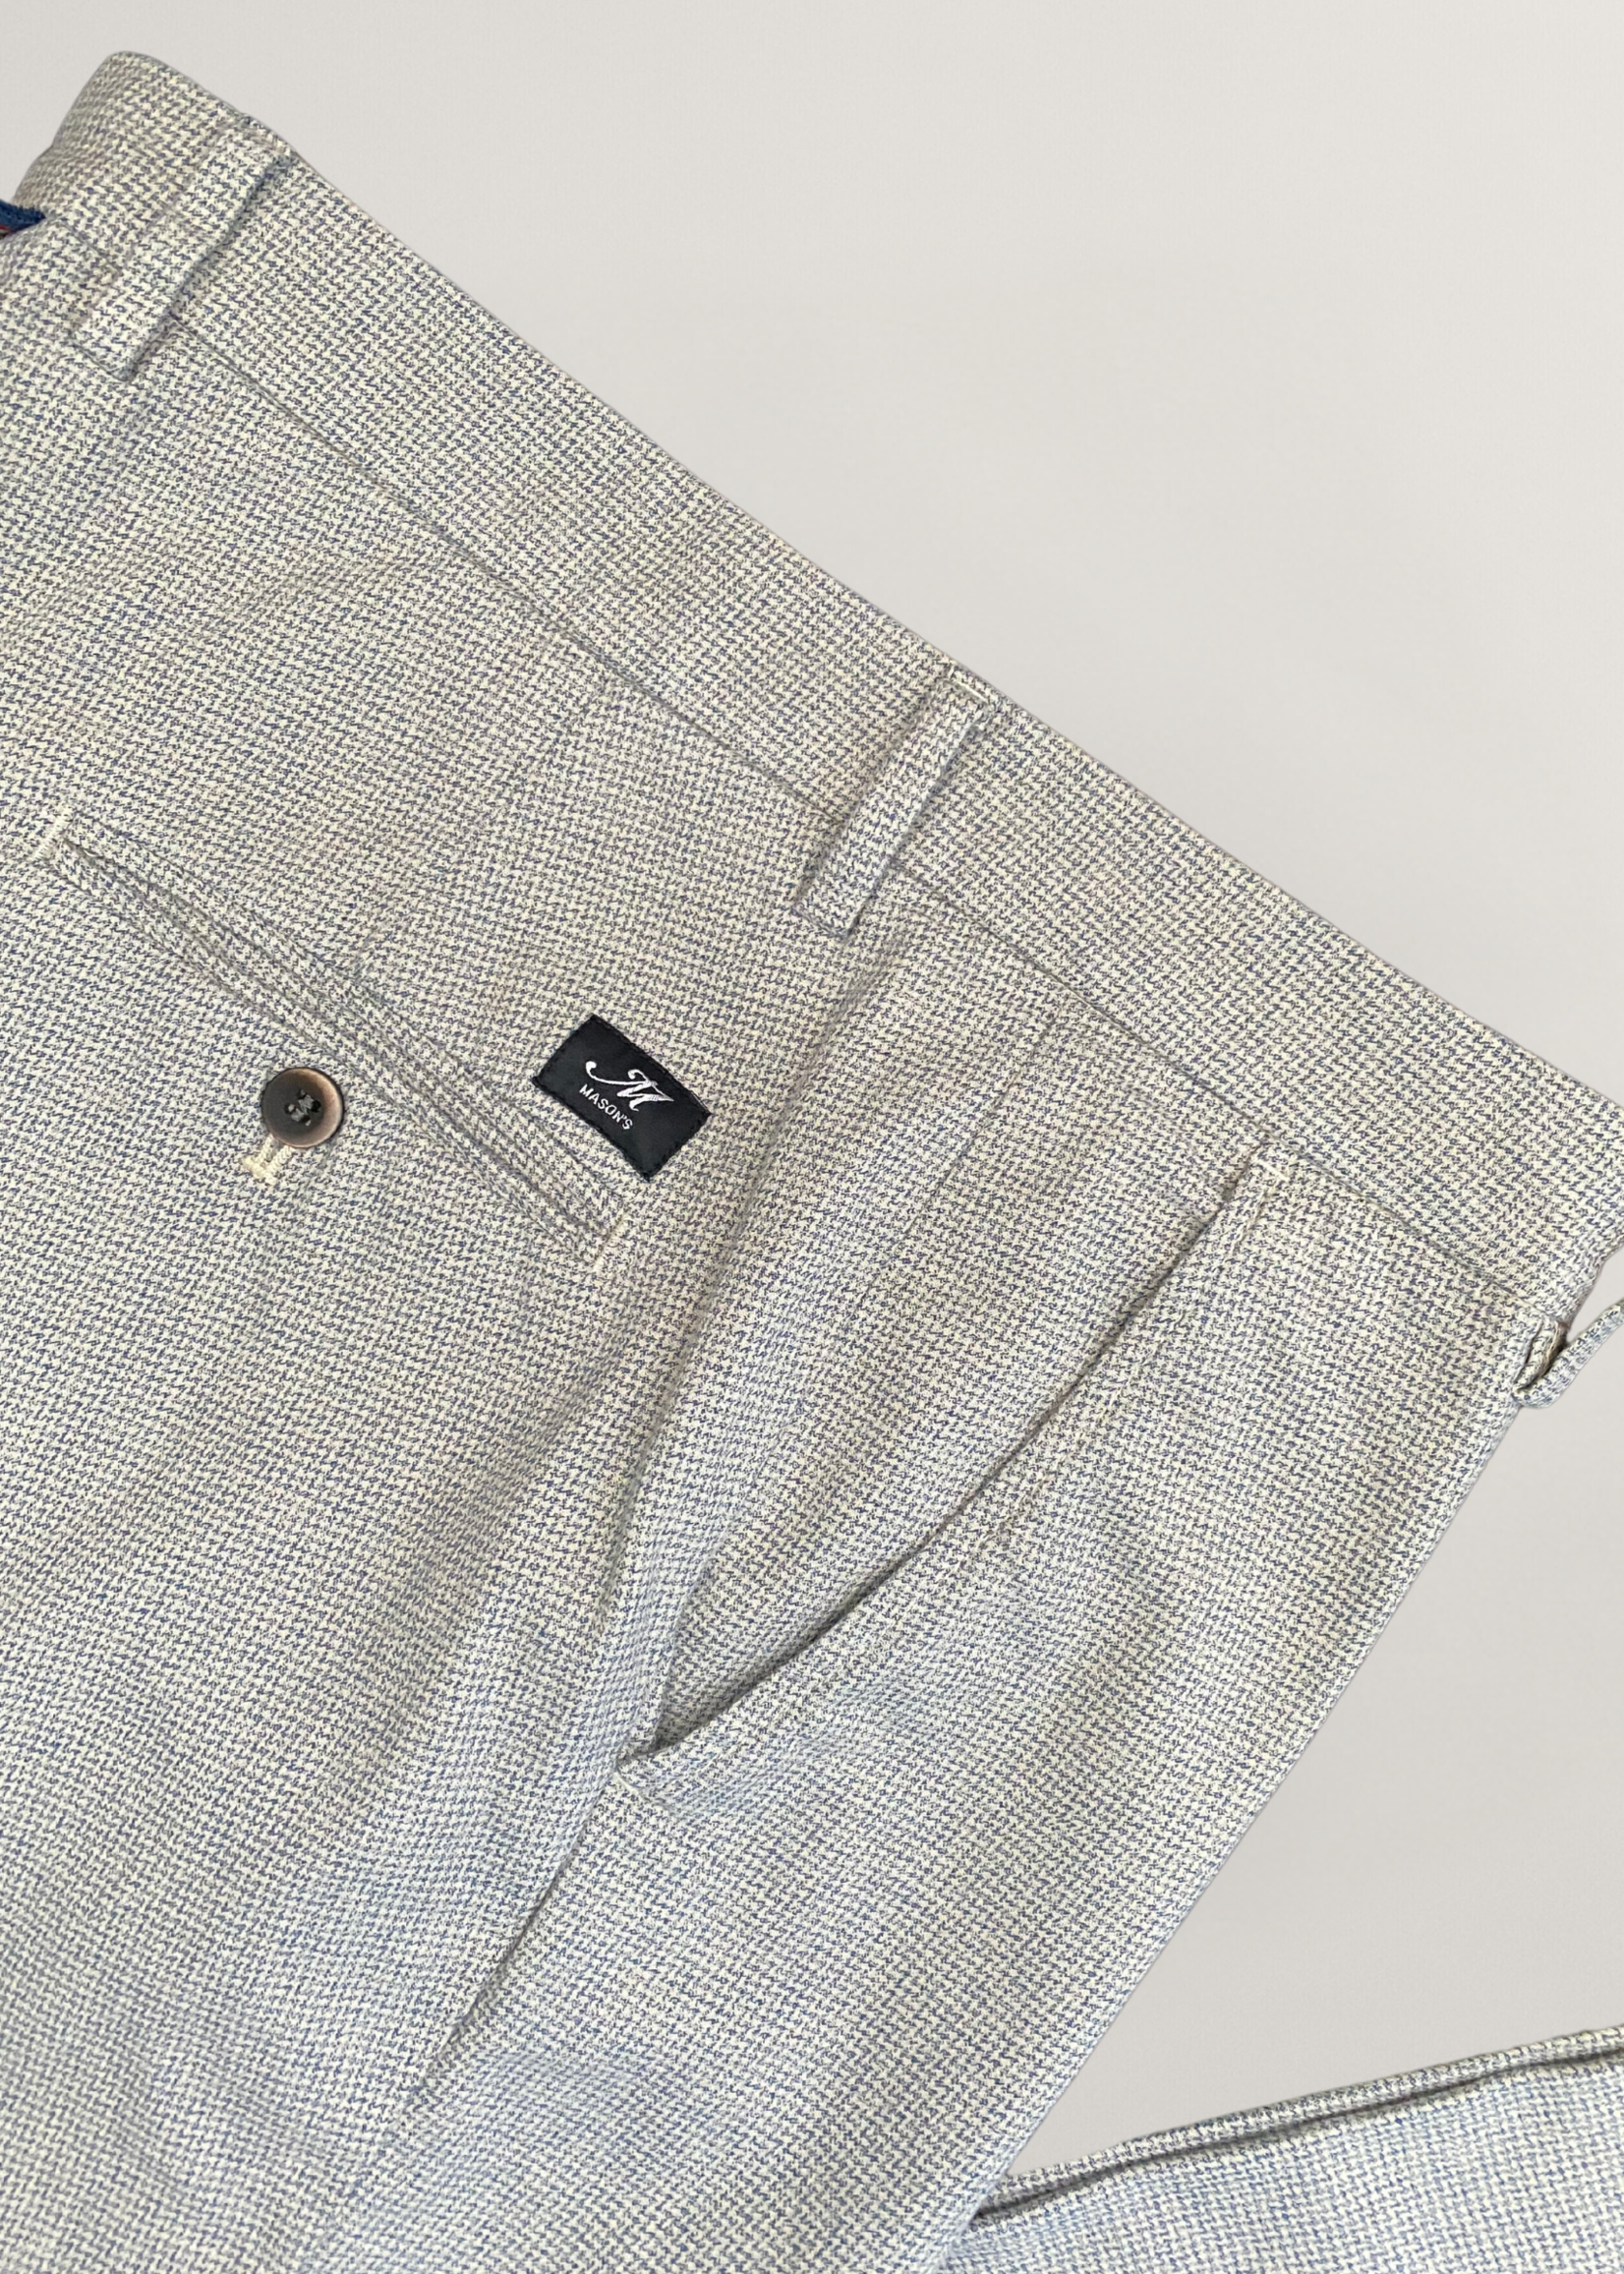 MASON'S Torino Style pantalon chino homme en coton micro-motif slim - Beige